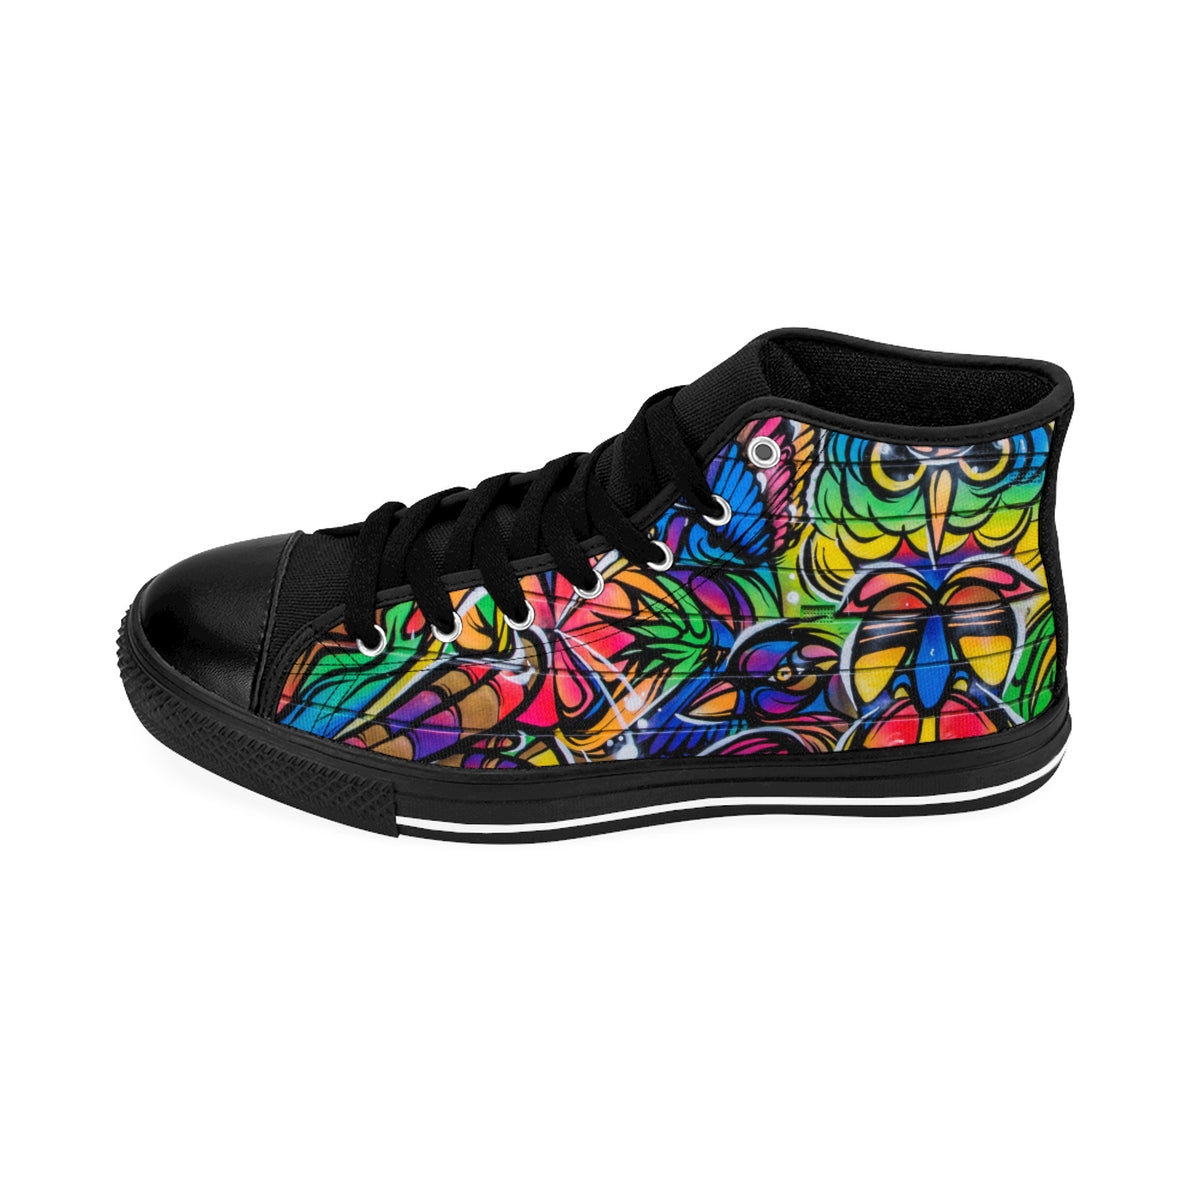 The OG Graffiti Hi-Top Shoes - MojoSoMint